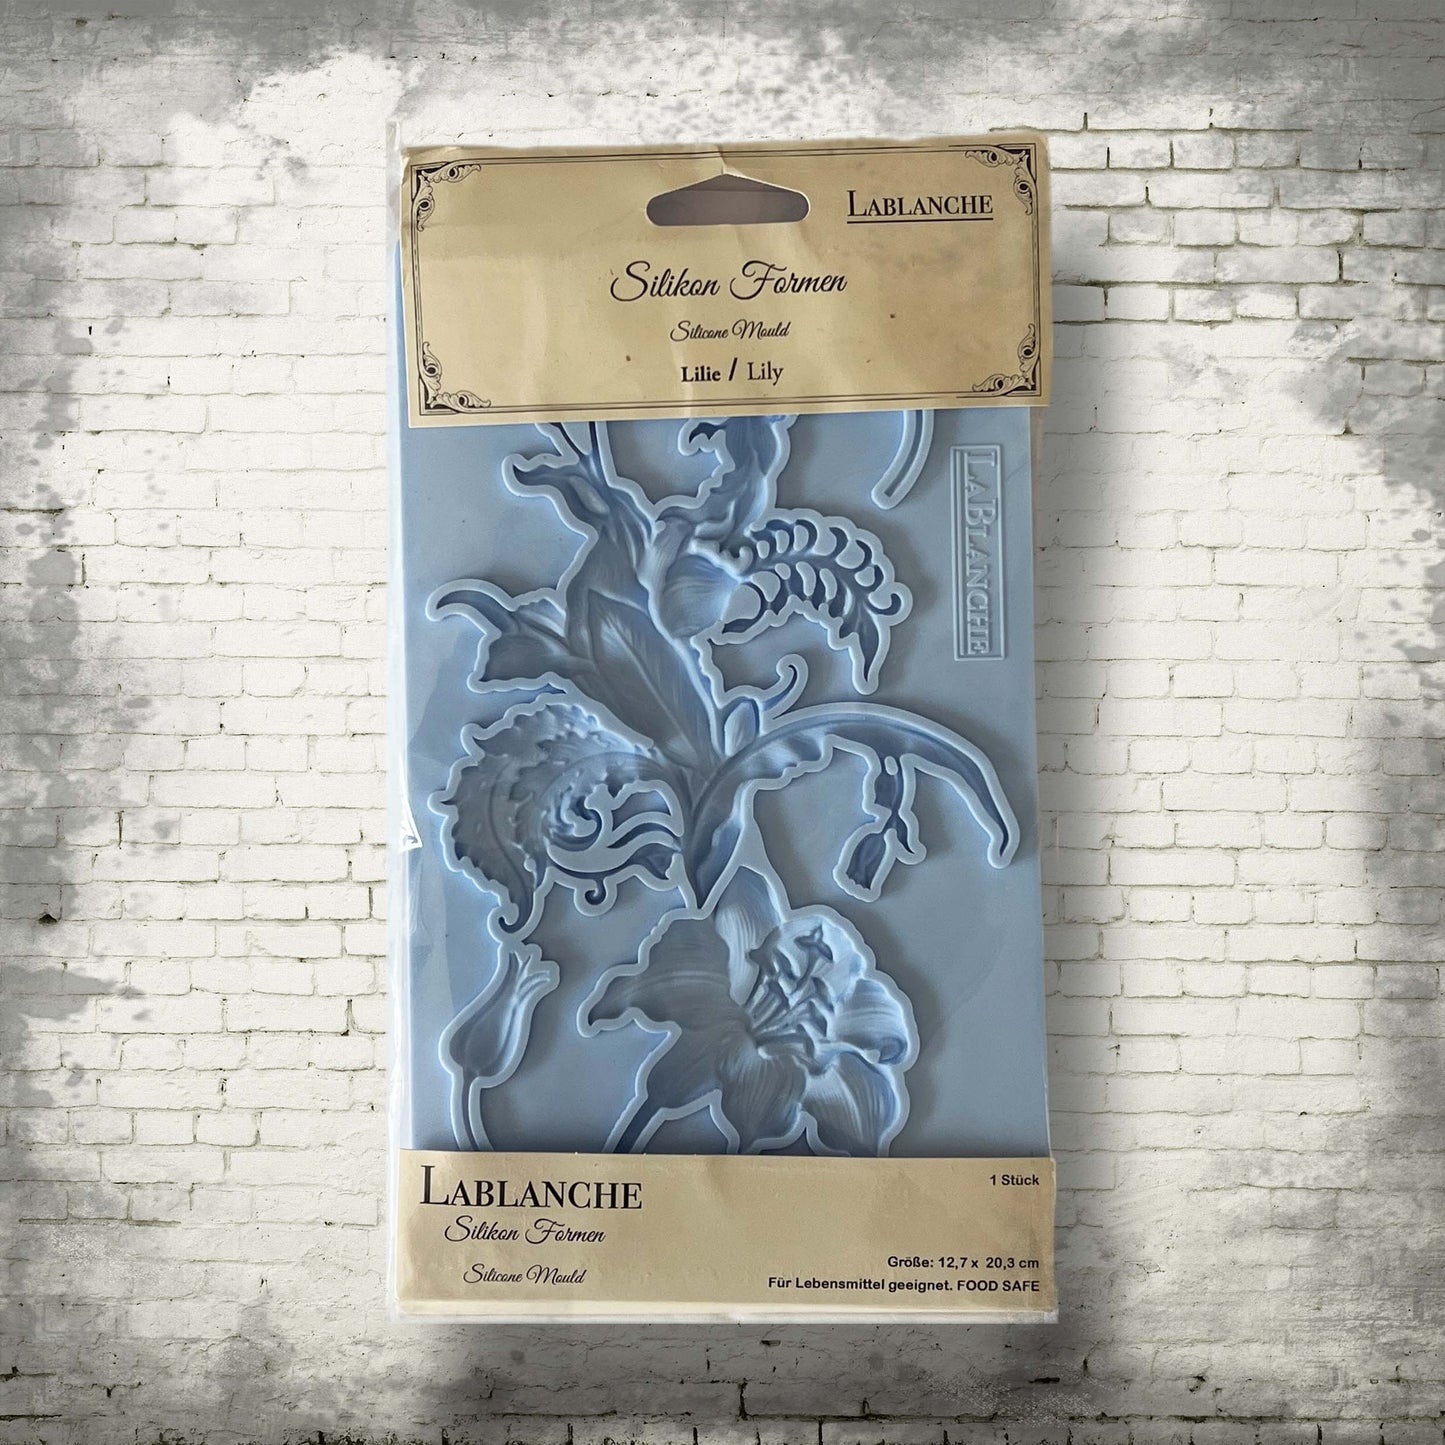 LeBlanche Lily Silicone Mould - Limited Edition